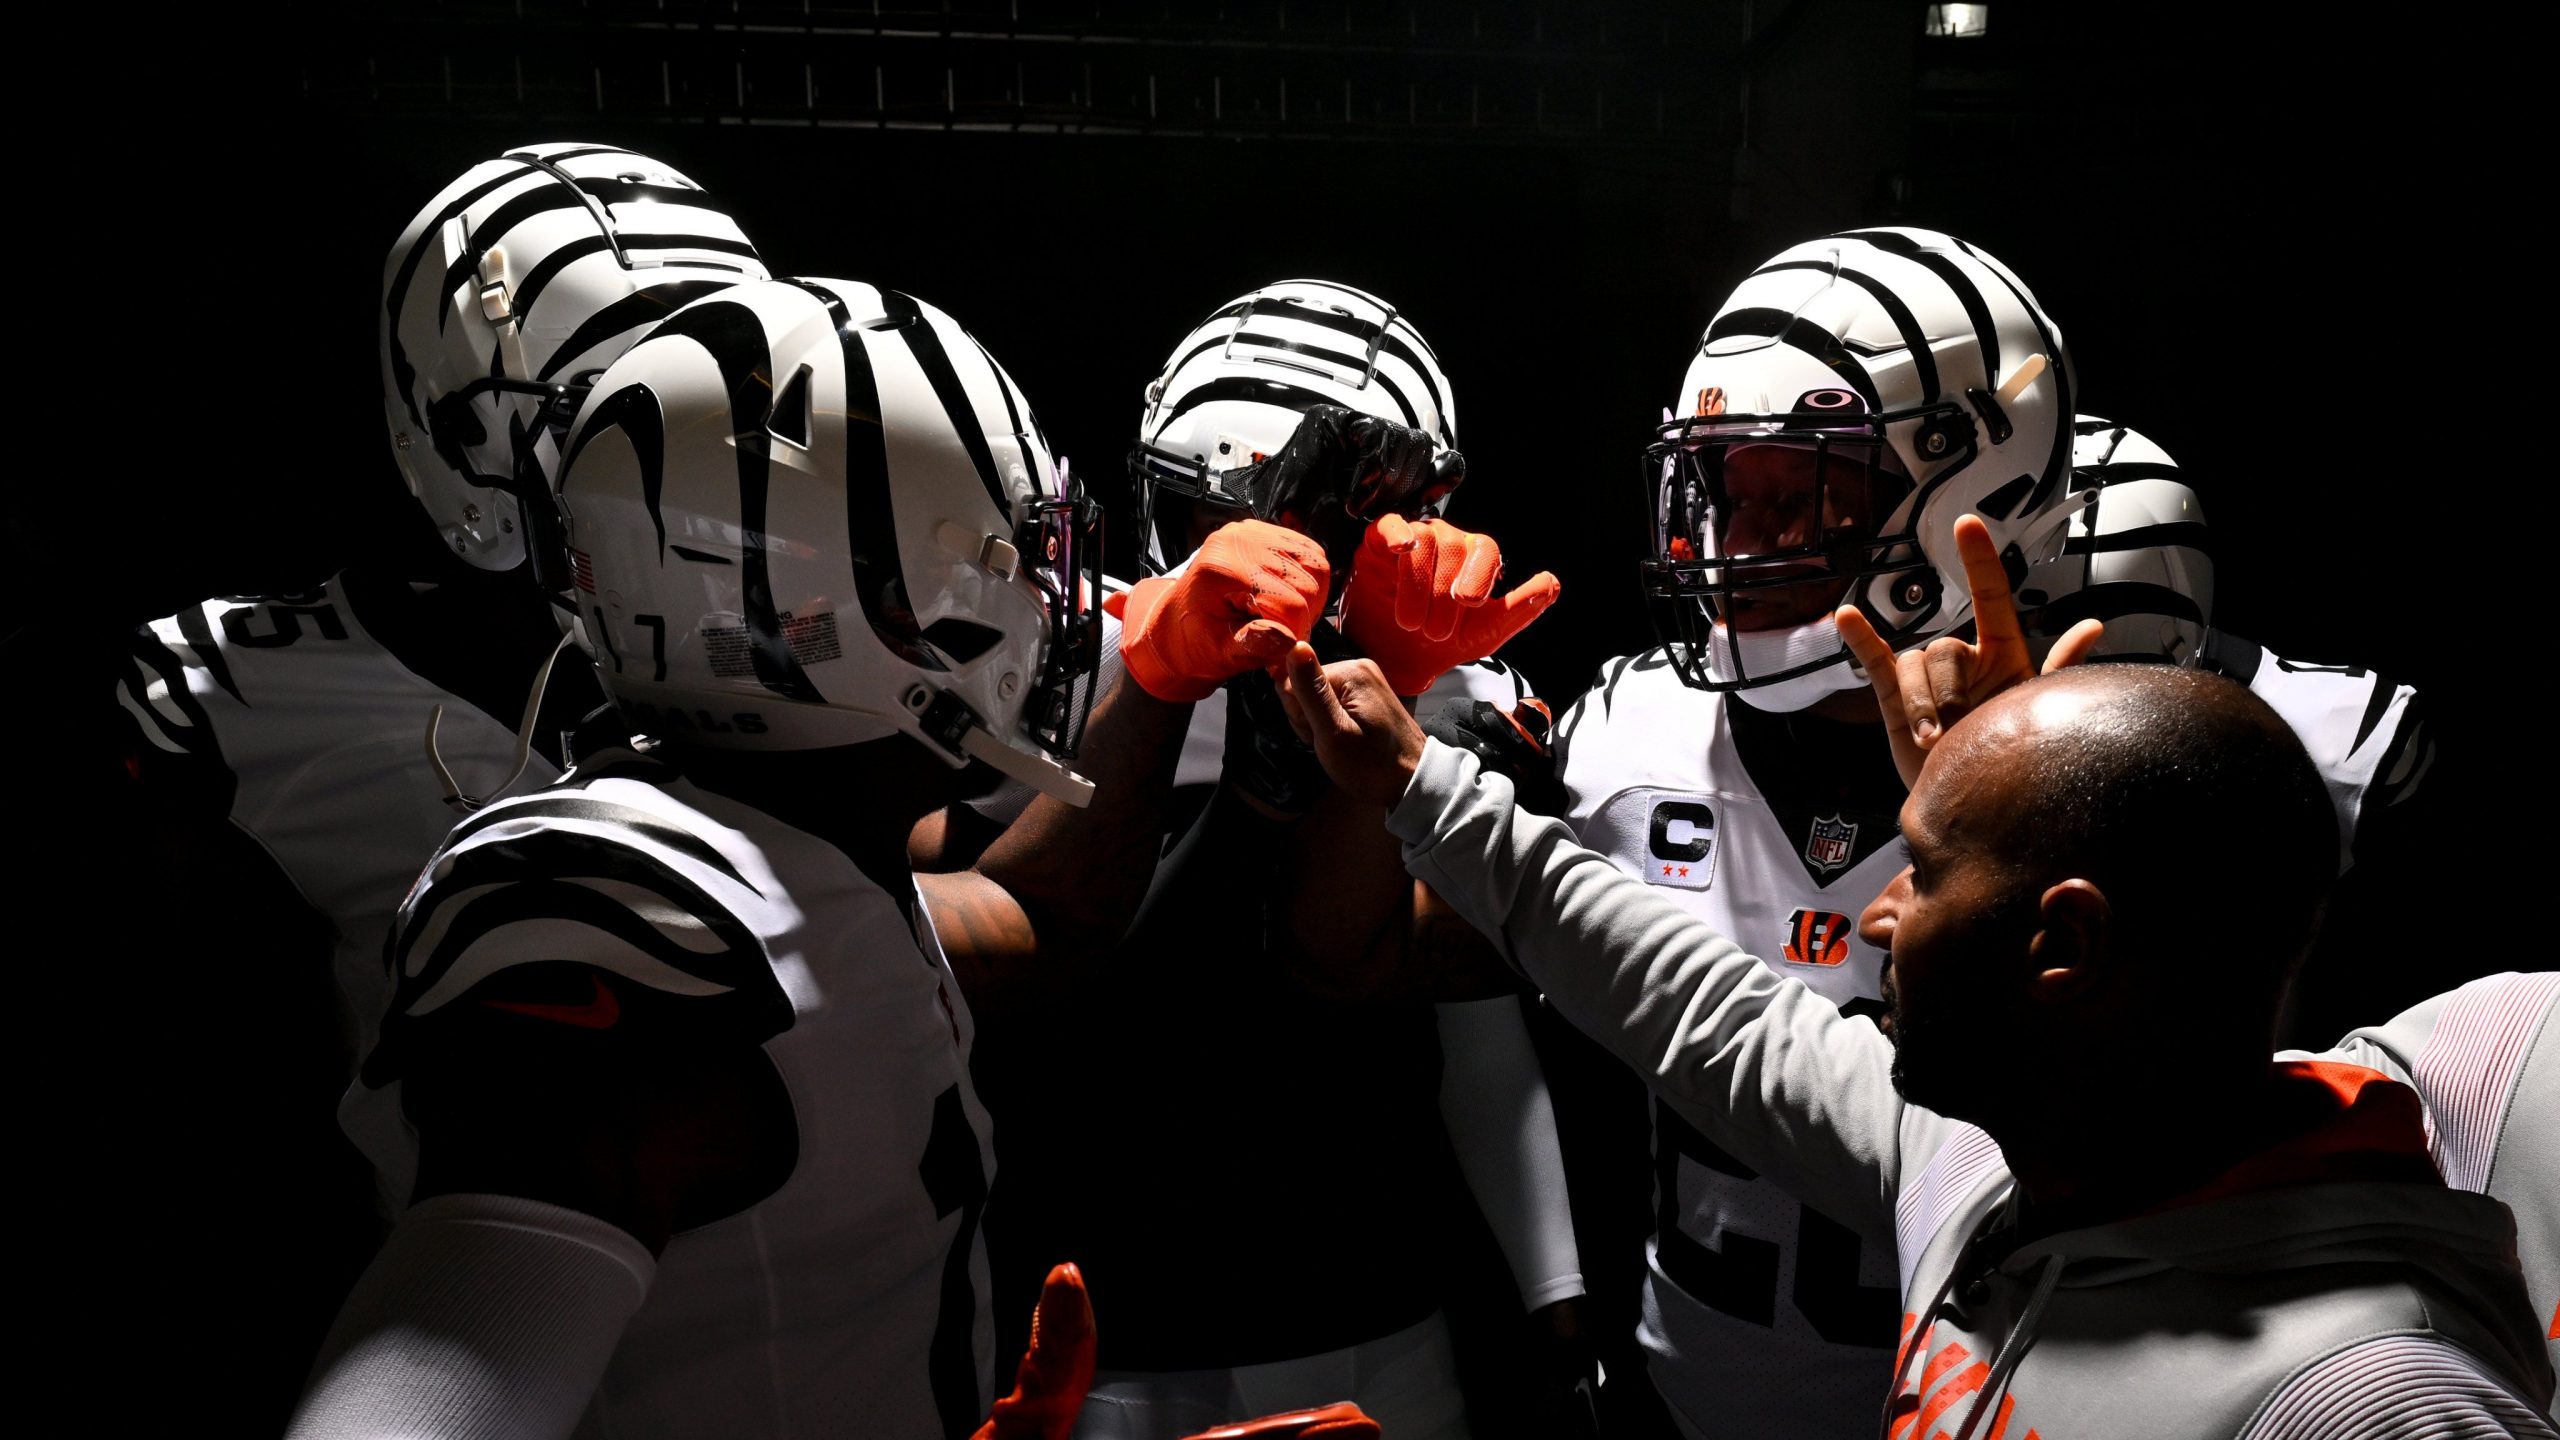 Why Cincinnati Bengals wore ‘White Bengal’ helmet vs Miami Dolphins